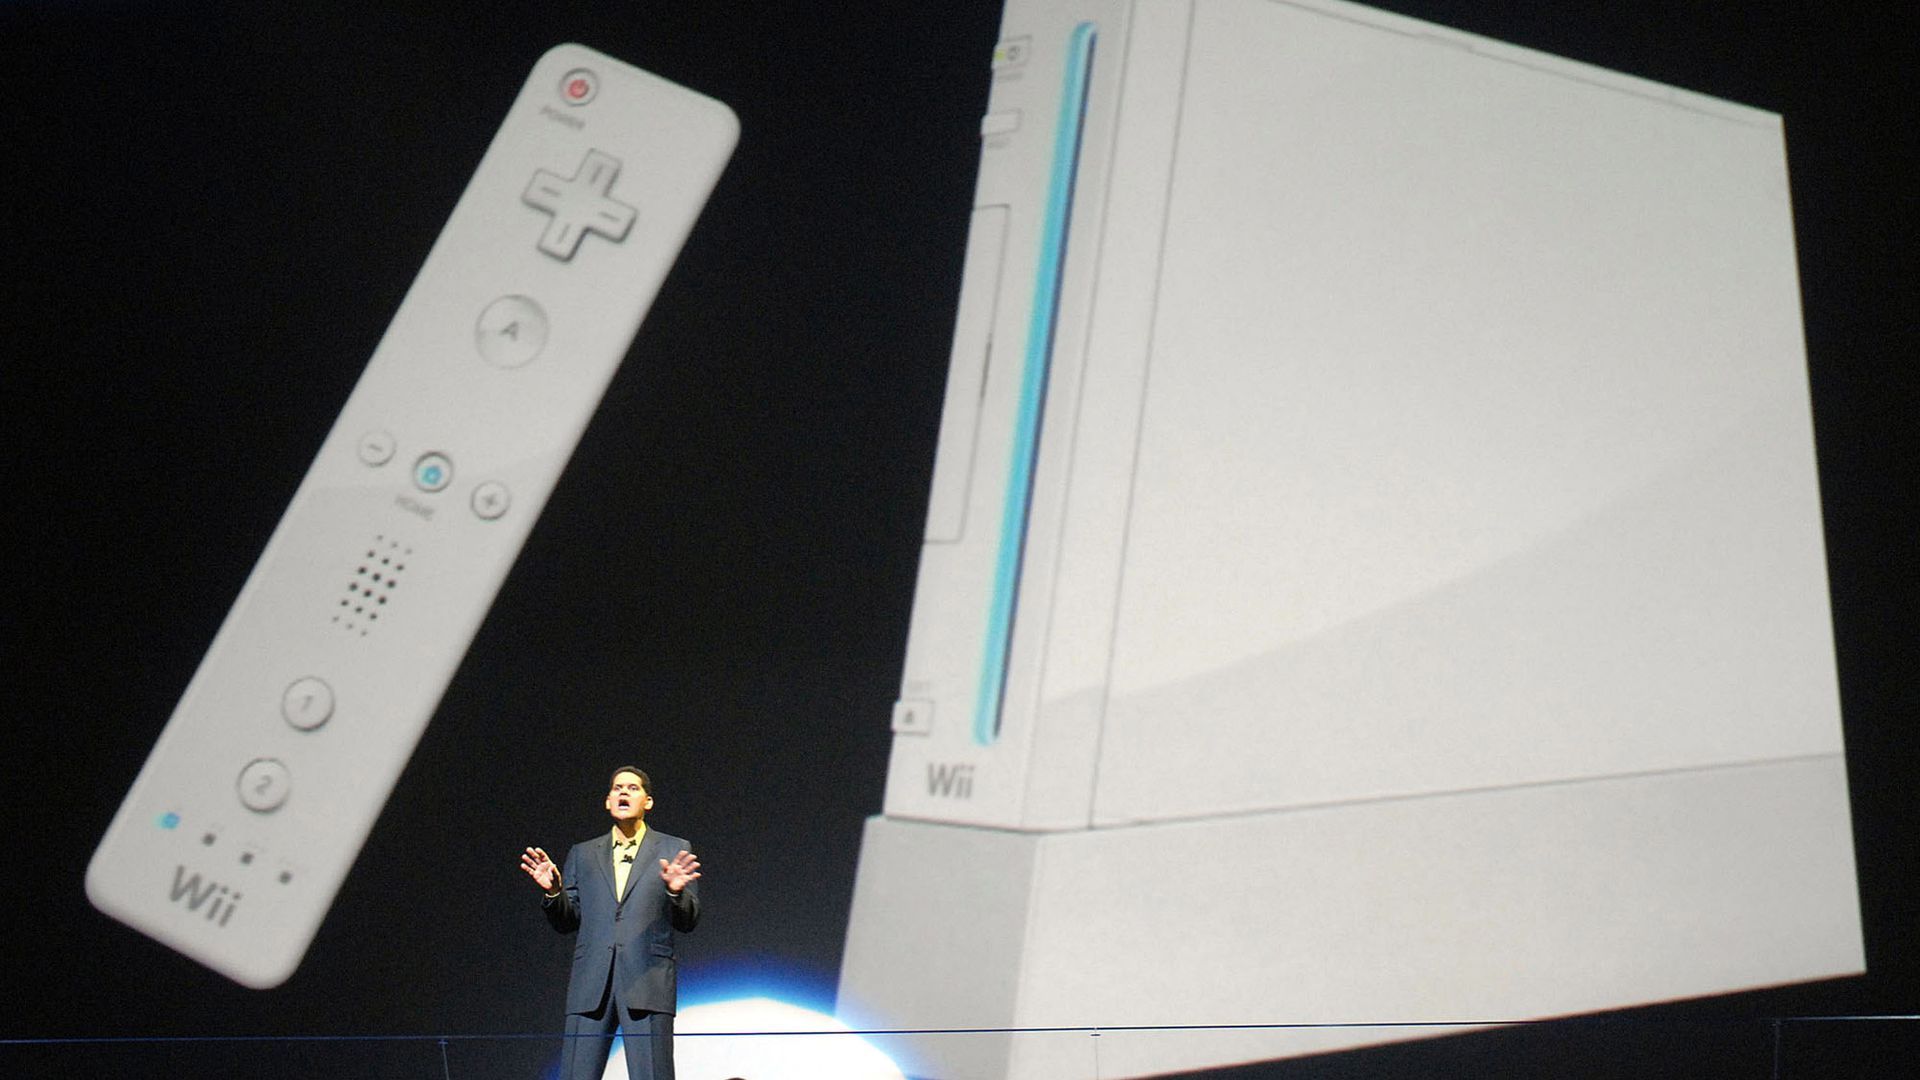 The Wii showcase in 2006